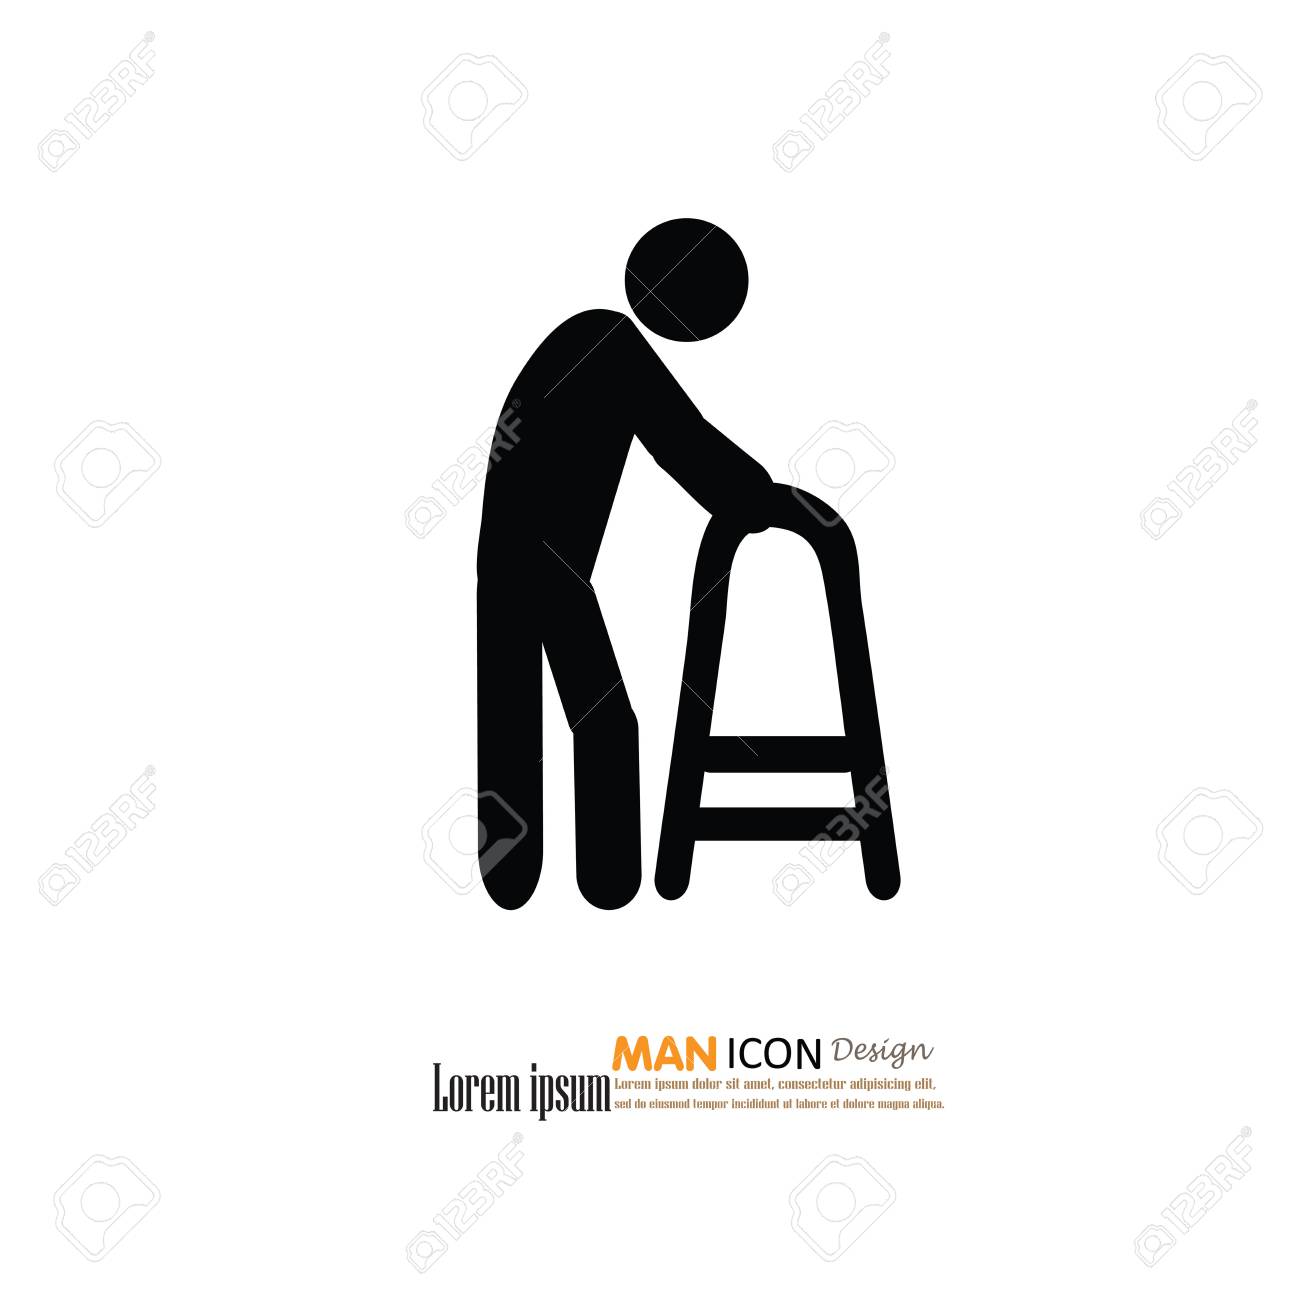 Elderly-couple icons | Noun Project